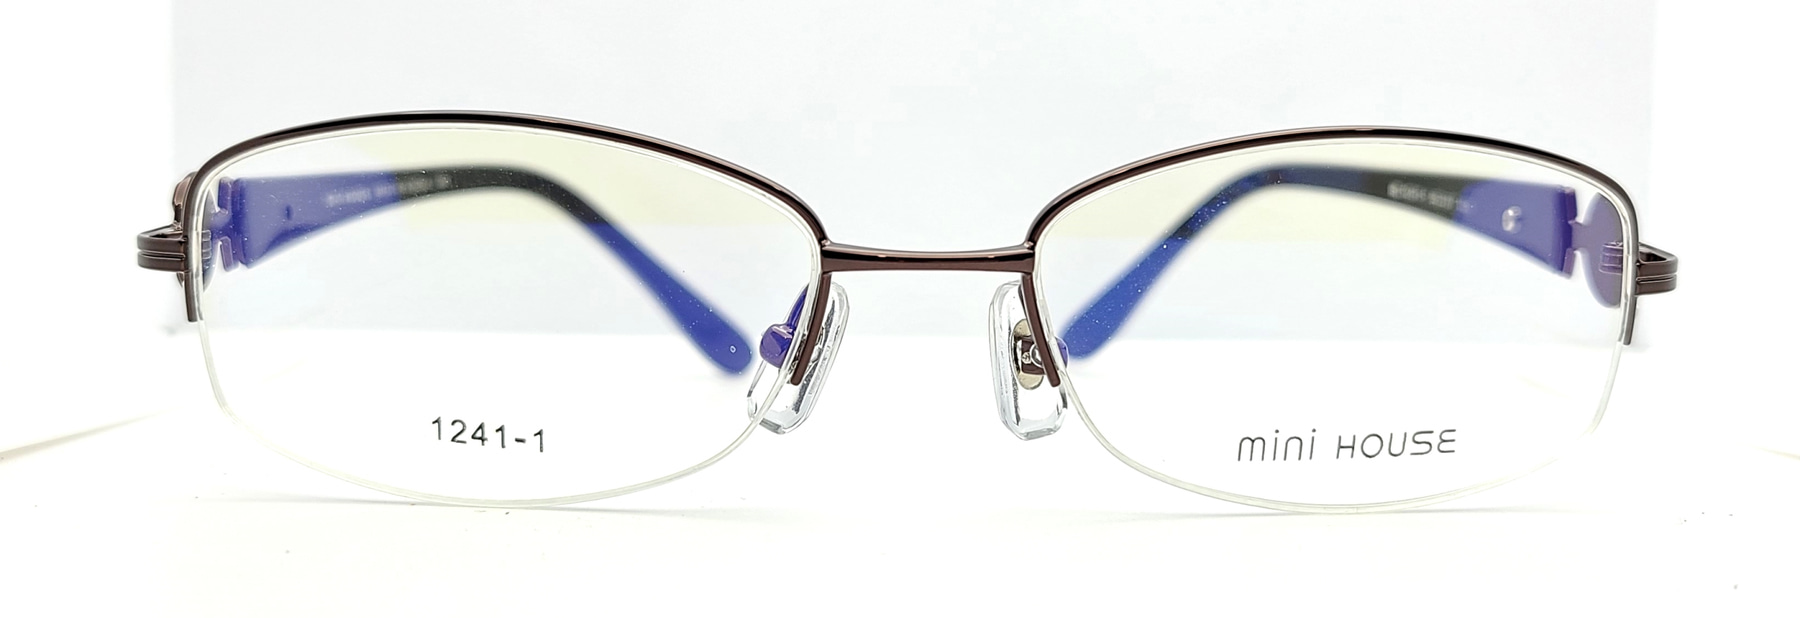 MINIHOUSE M-1241-1, Korean glasses, sunglasses, eyeglasses, glasses